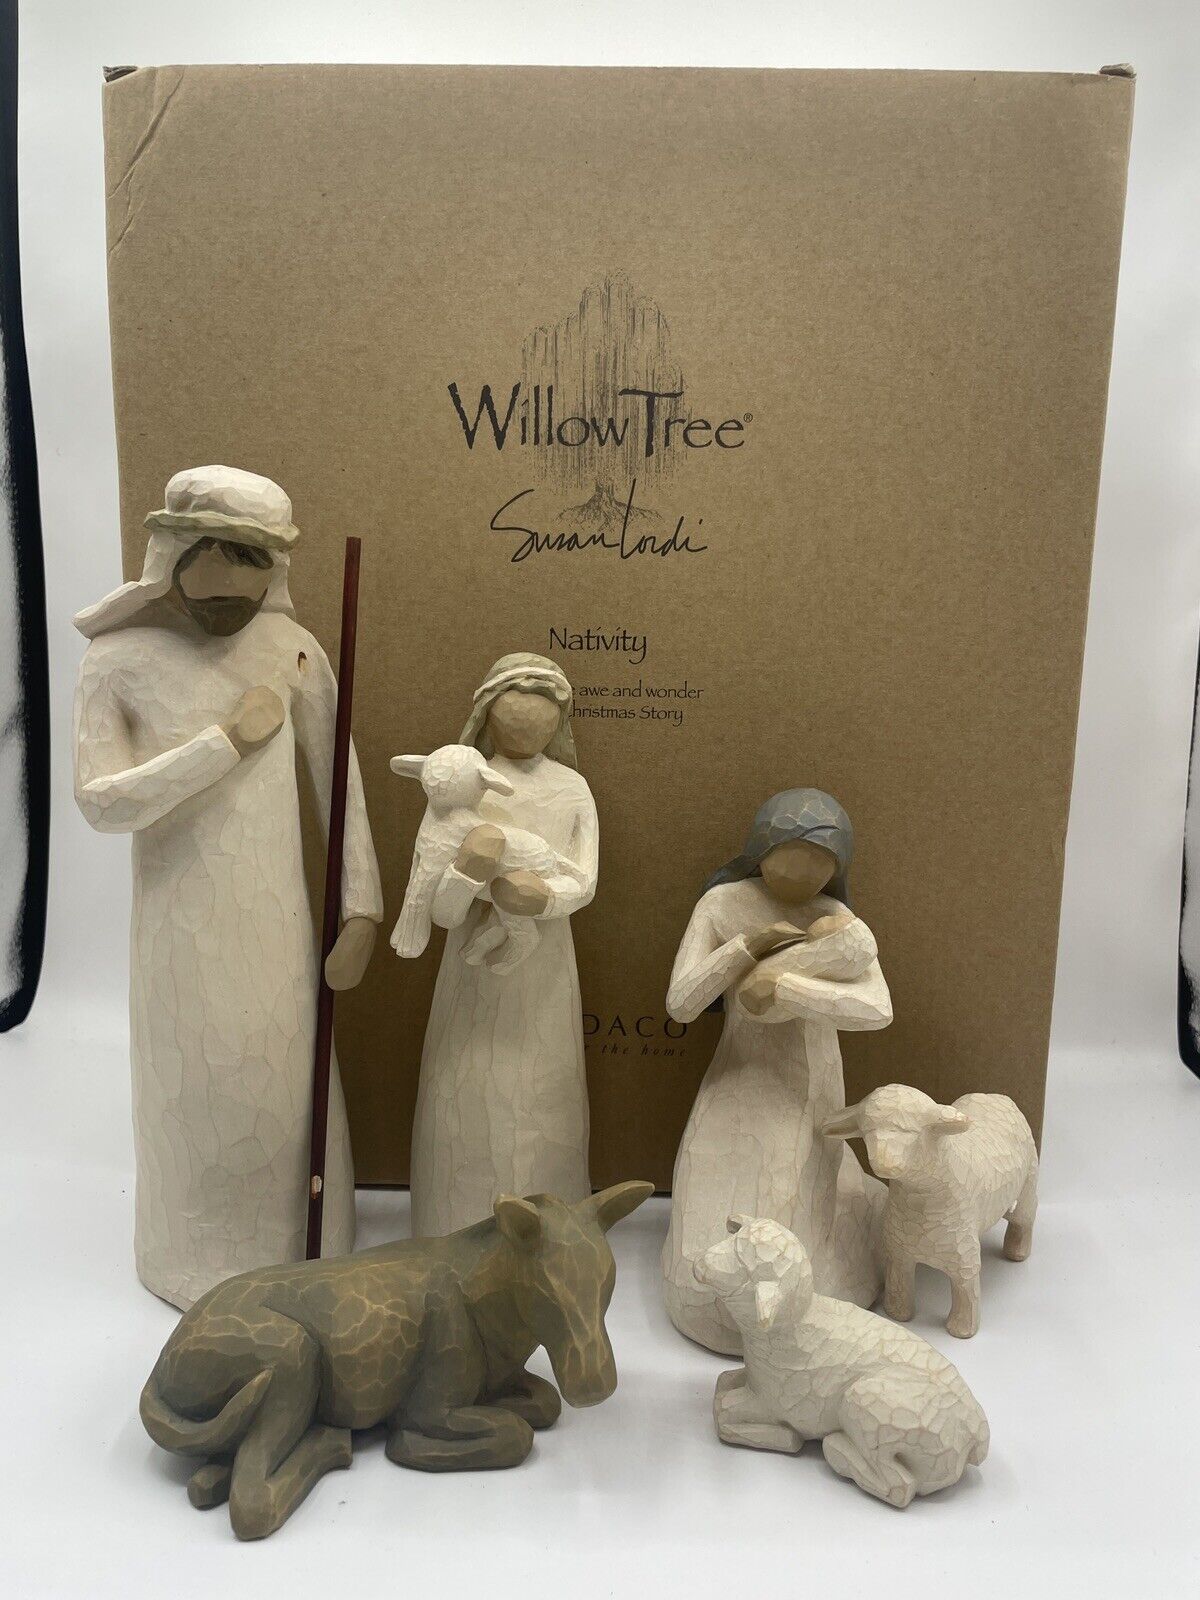 6 Piece Willow Tree Nativity Set Sculpted Hand-Painted Original Box Mary Joseph